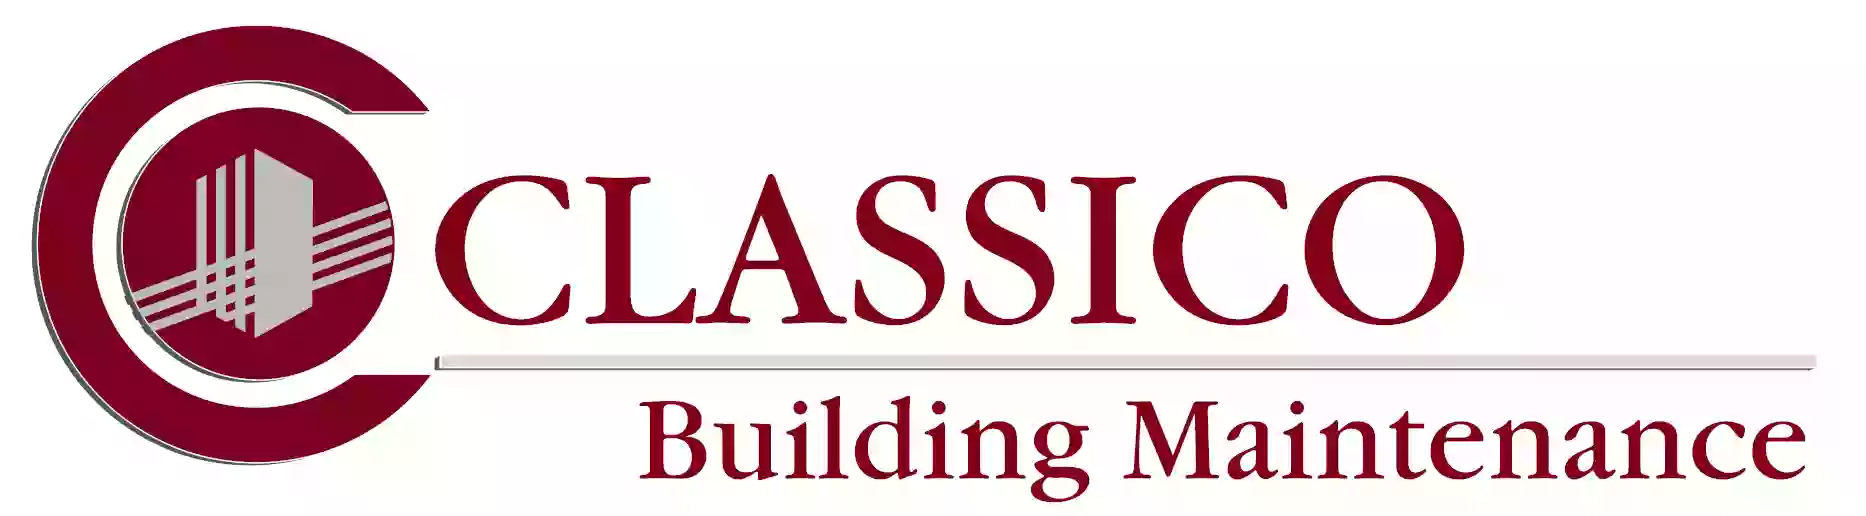 Classico Building Maintenance Inc